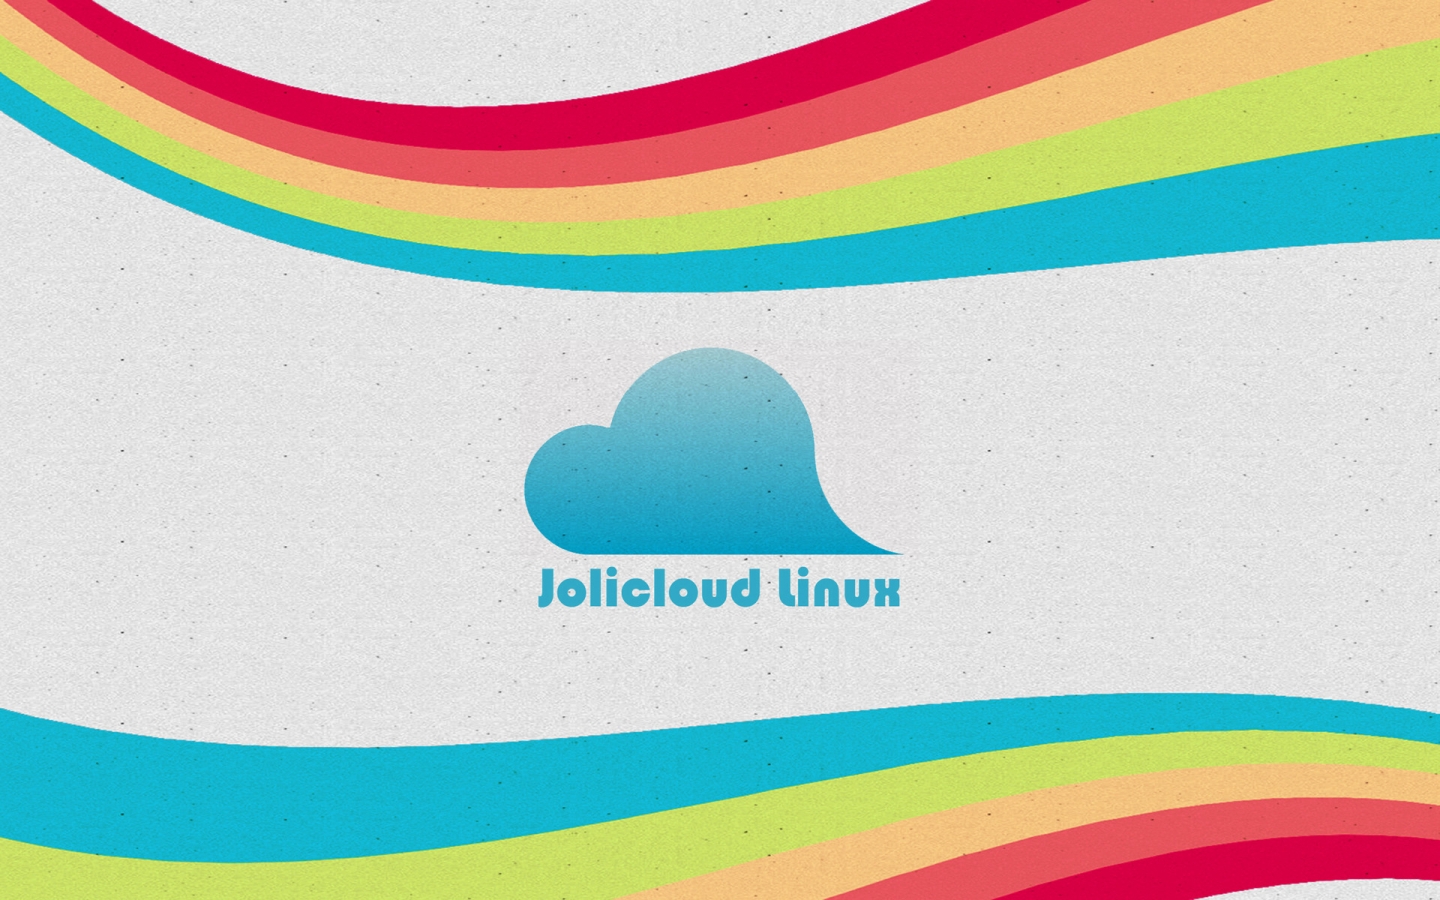 Jolicloud Linux for 1440 x 900 widescreen resolution